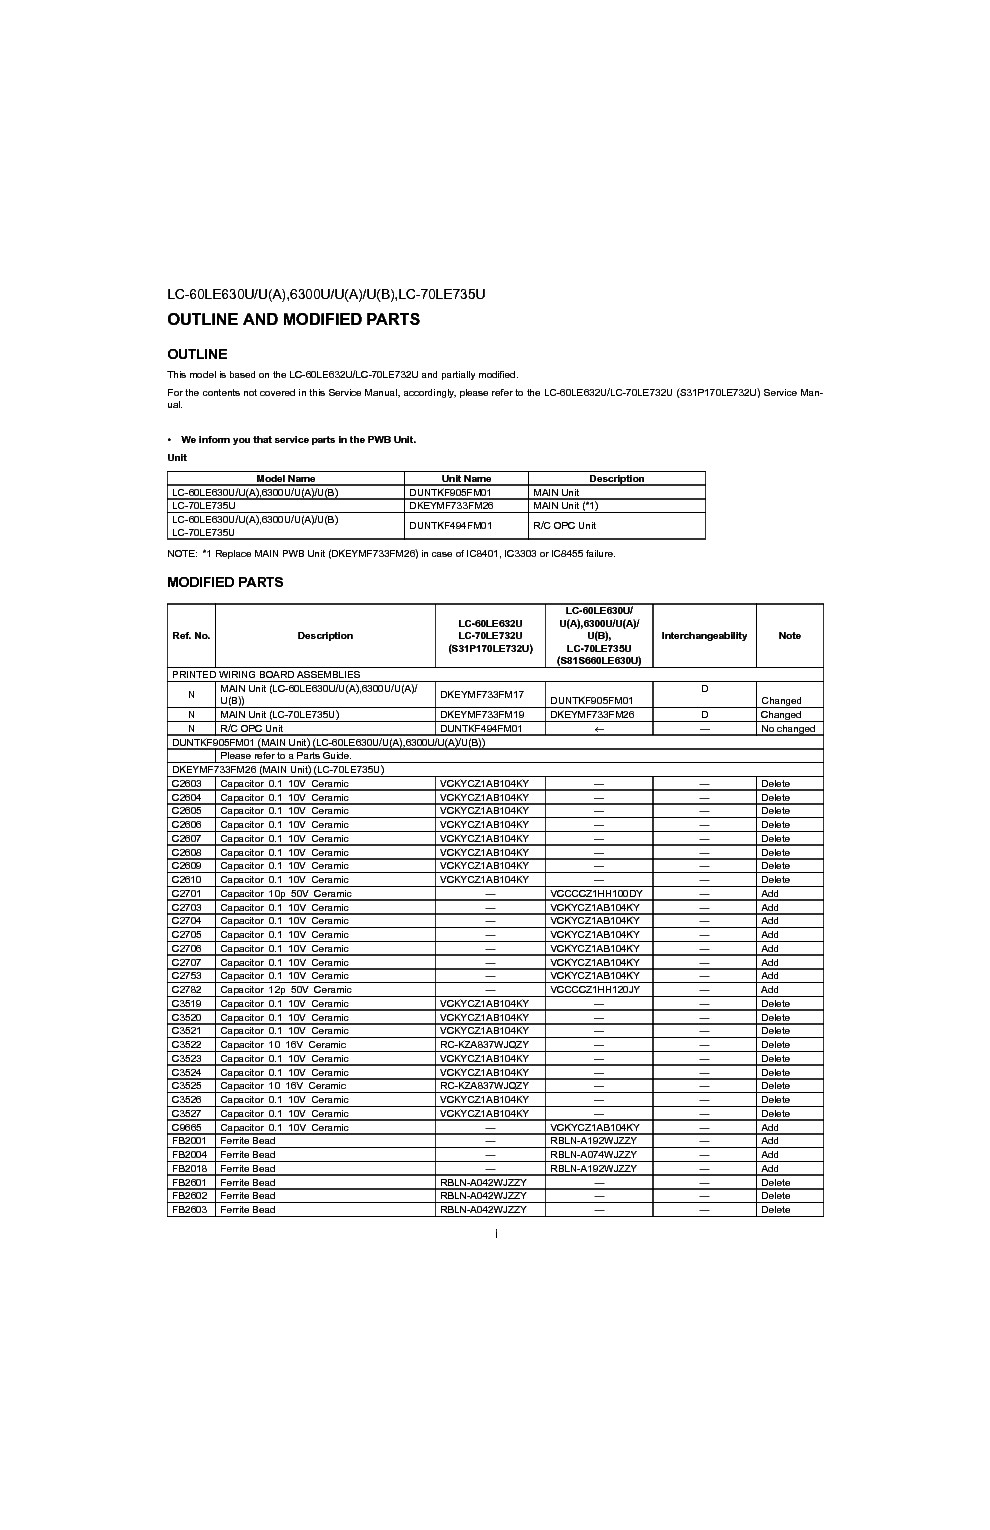 SHARP LC-60LE630U 6300 A B LC-70LE735U service manual (2nd page)